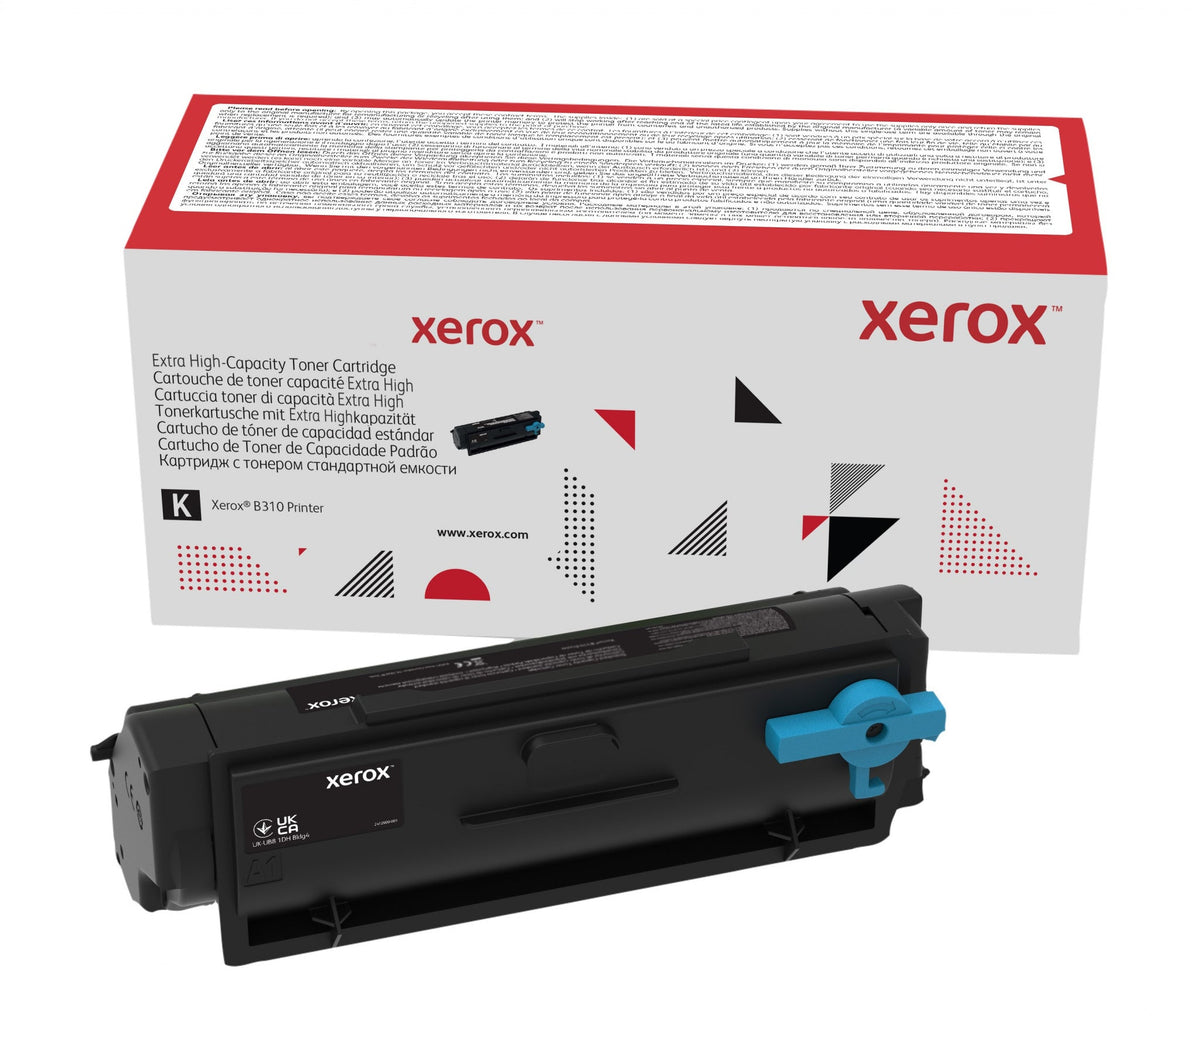 Xerox Genuine B305 / B310 / B315 Black Extra High Capacity Toner Cartridge (20000 pages) - 006R04378